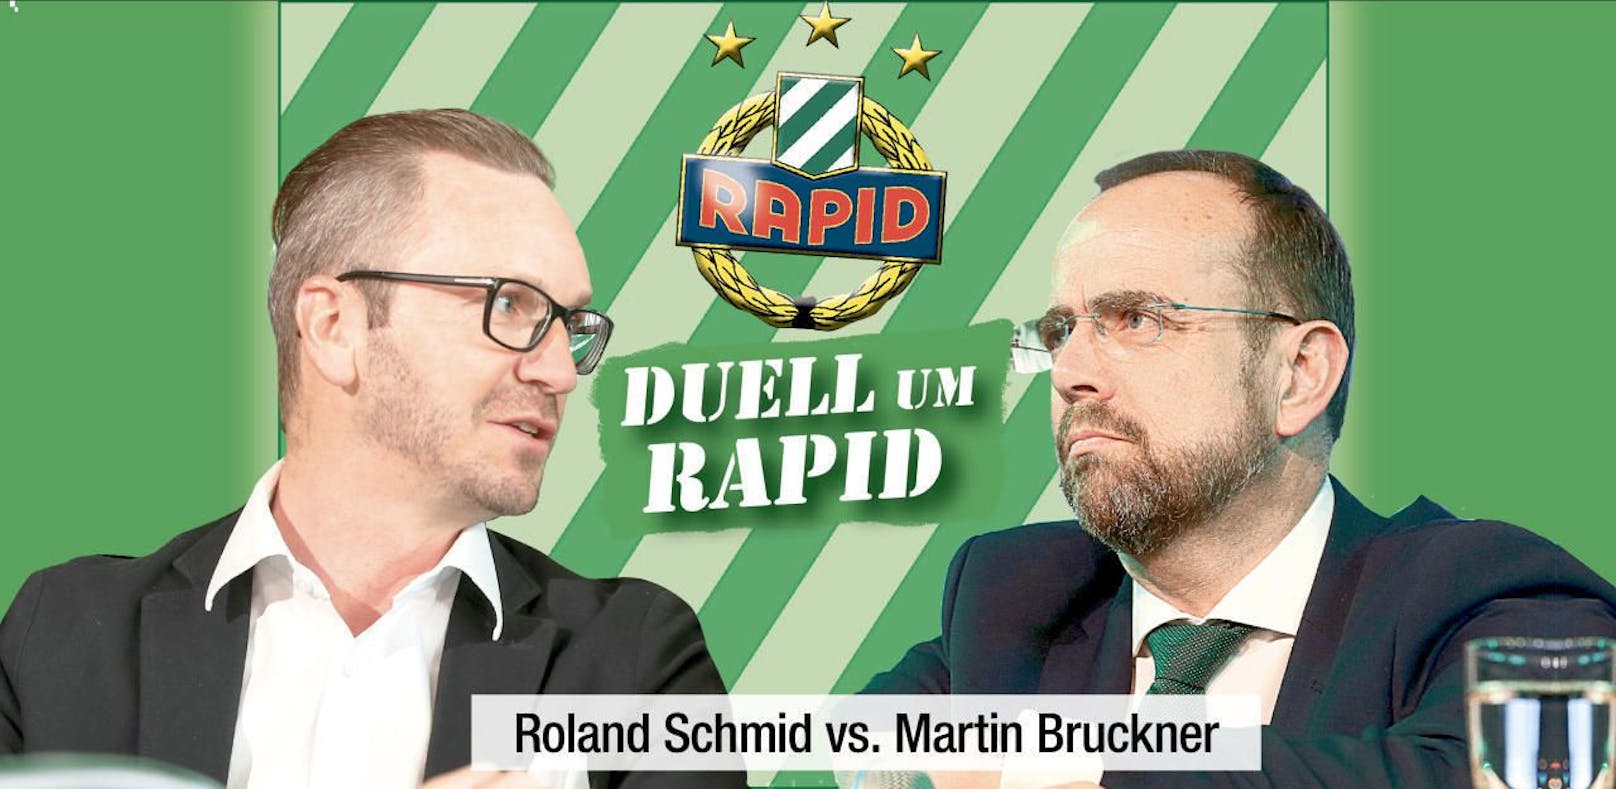 Roland Schmid gegen Martin Bruckner - das Duell um Rapid.